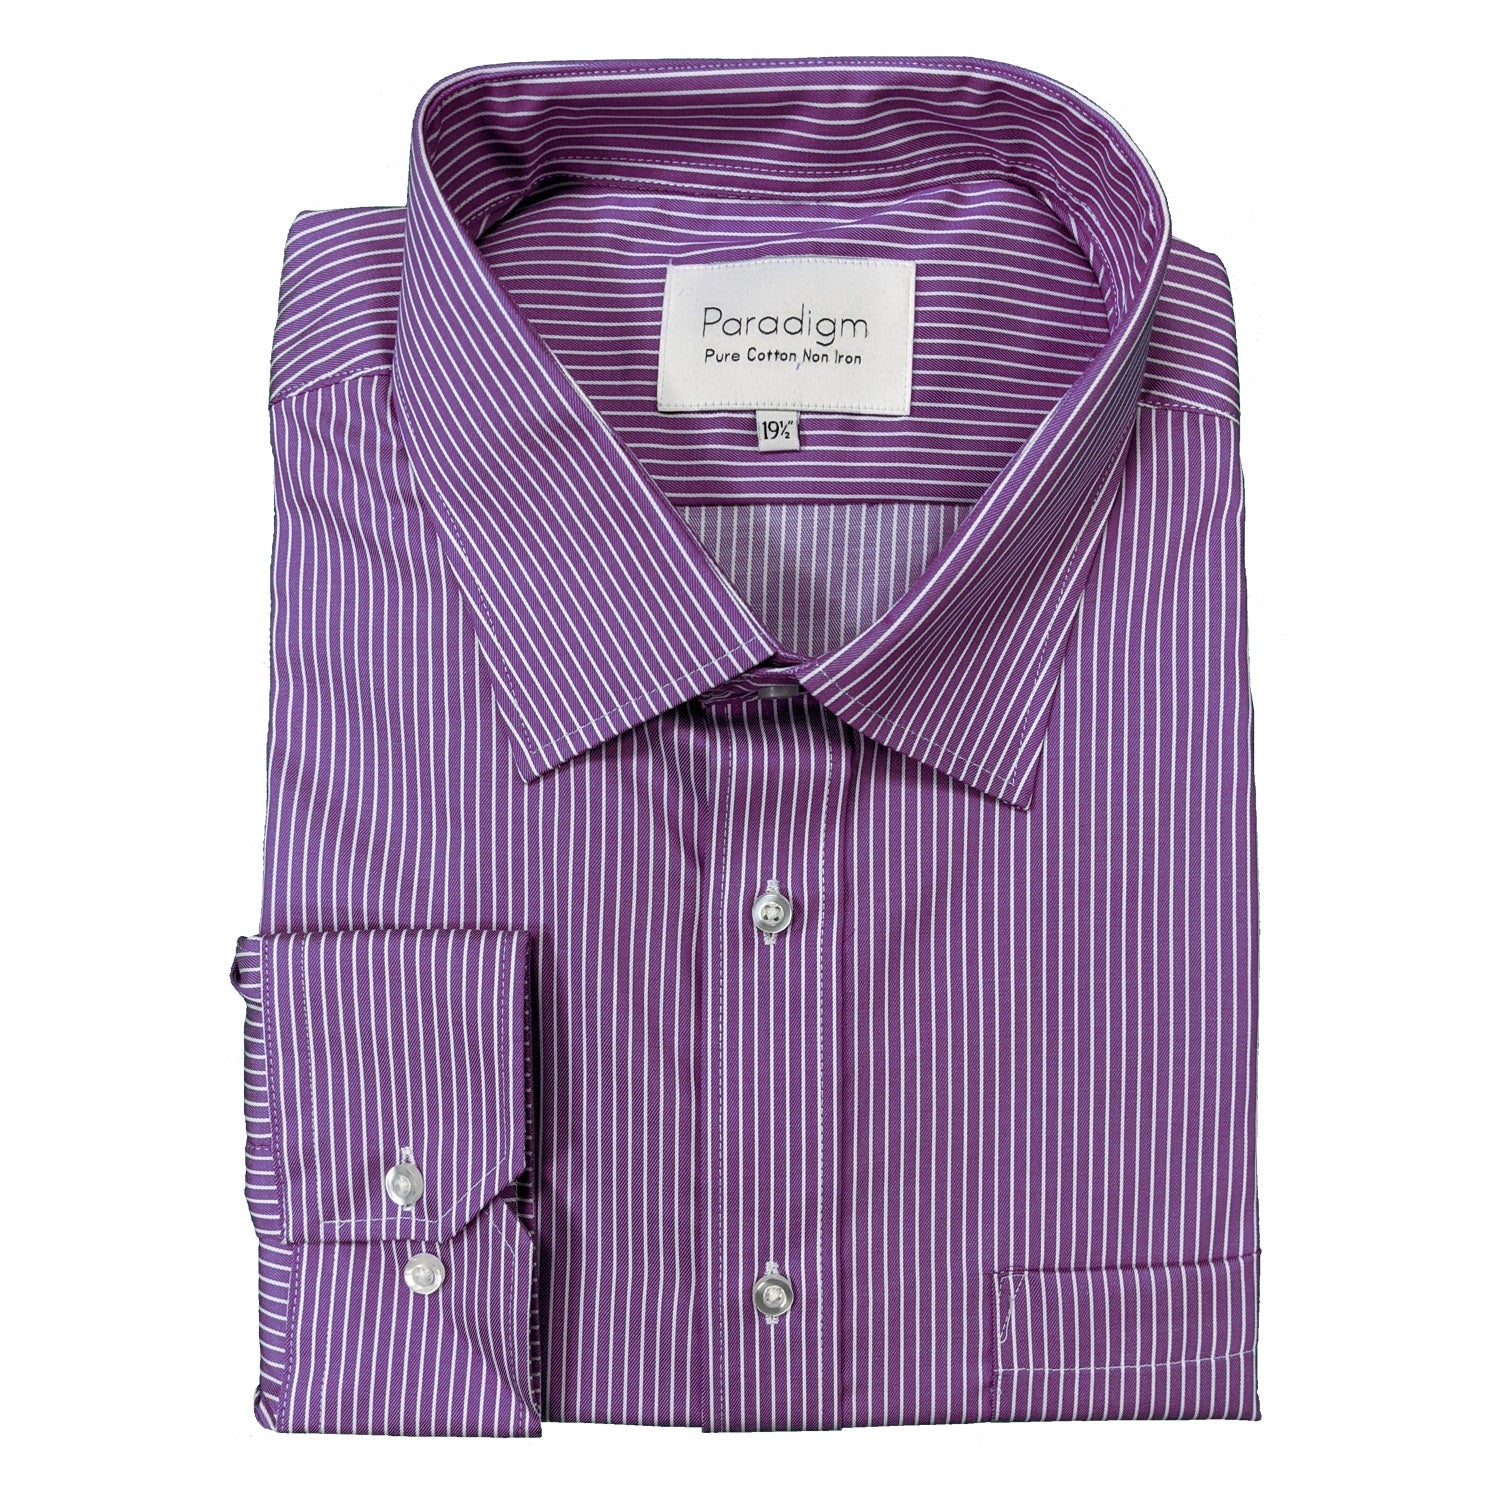 Paradigm Stripe Shirt - CX7031 - Grape 1